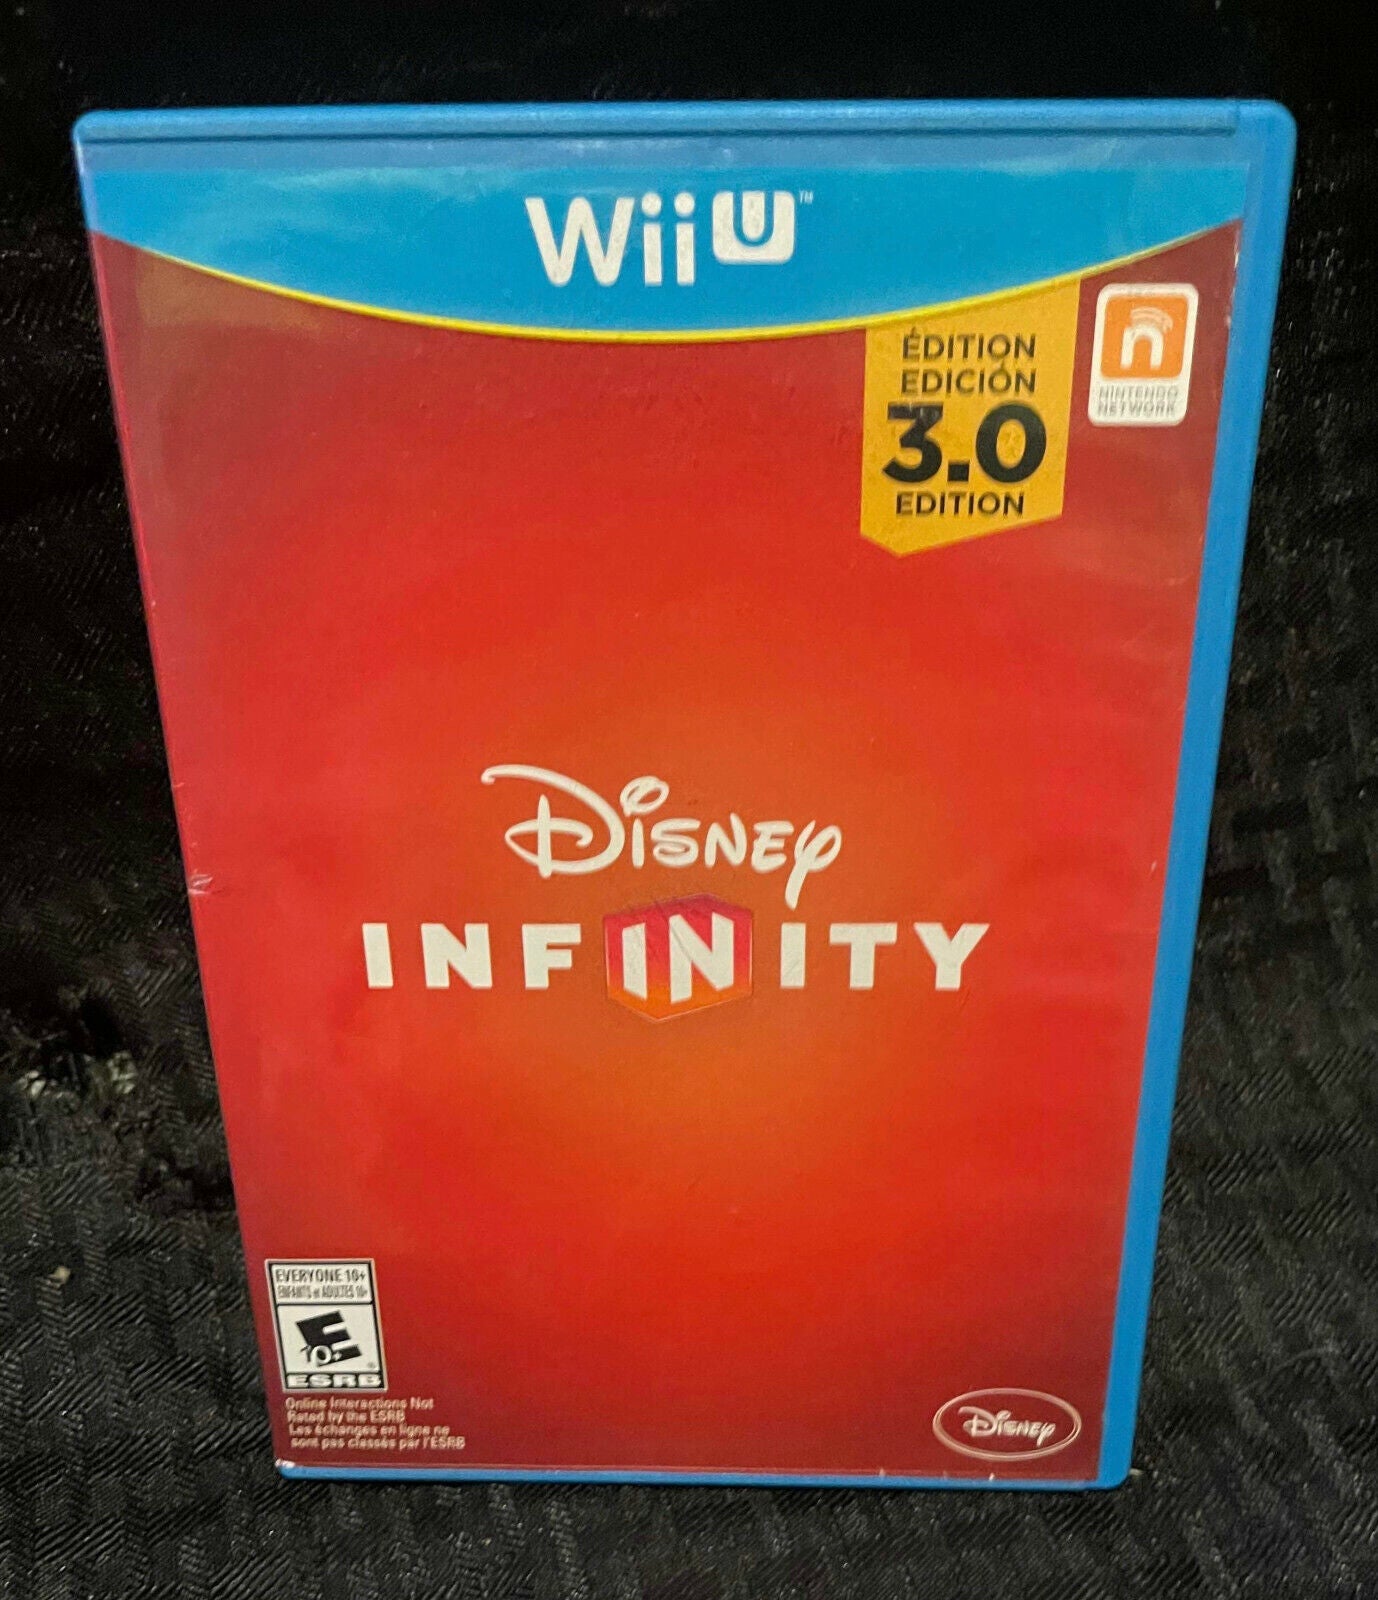 Disney Infinity 3.0 Game for Nintendo Wii U